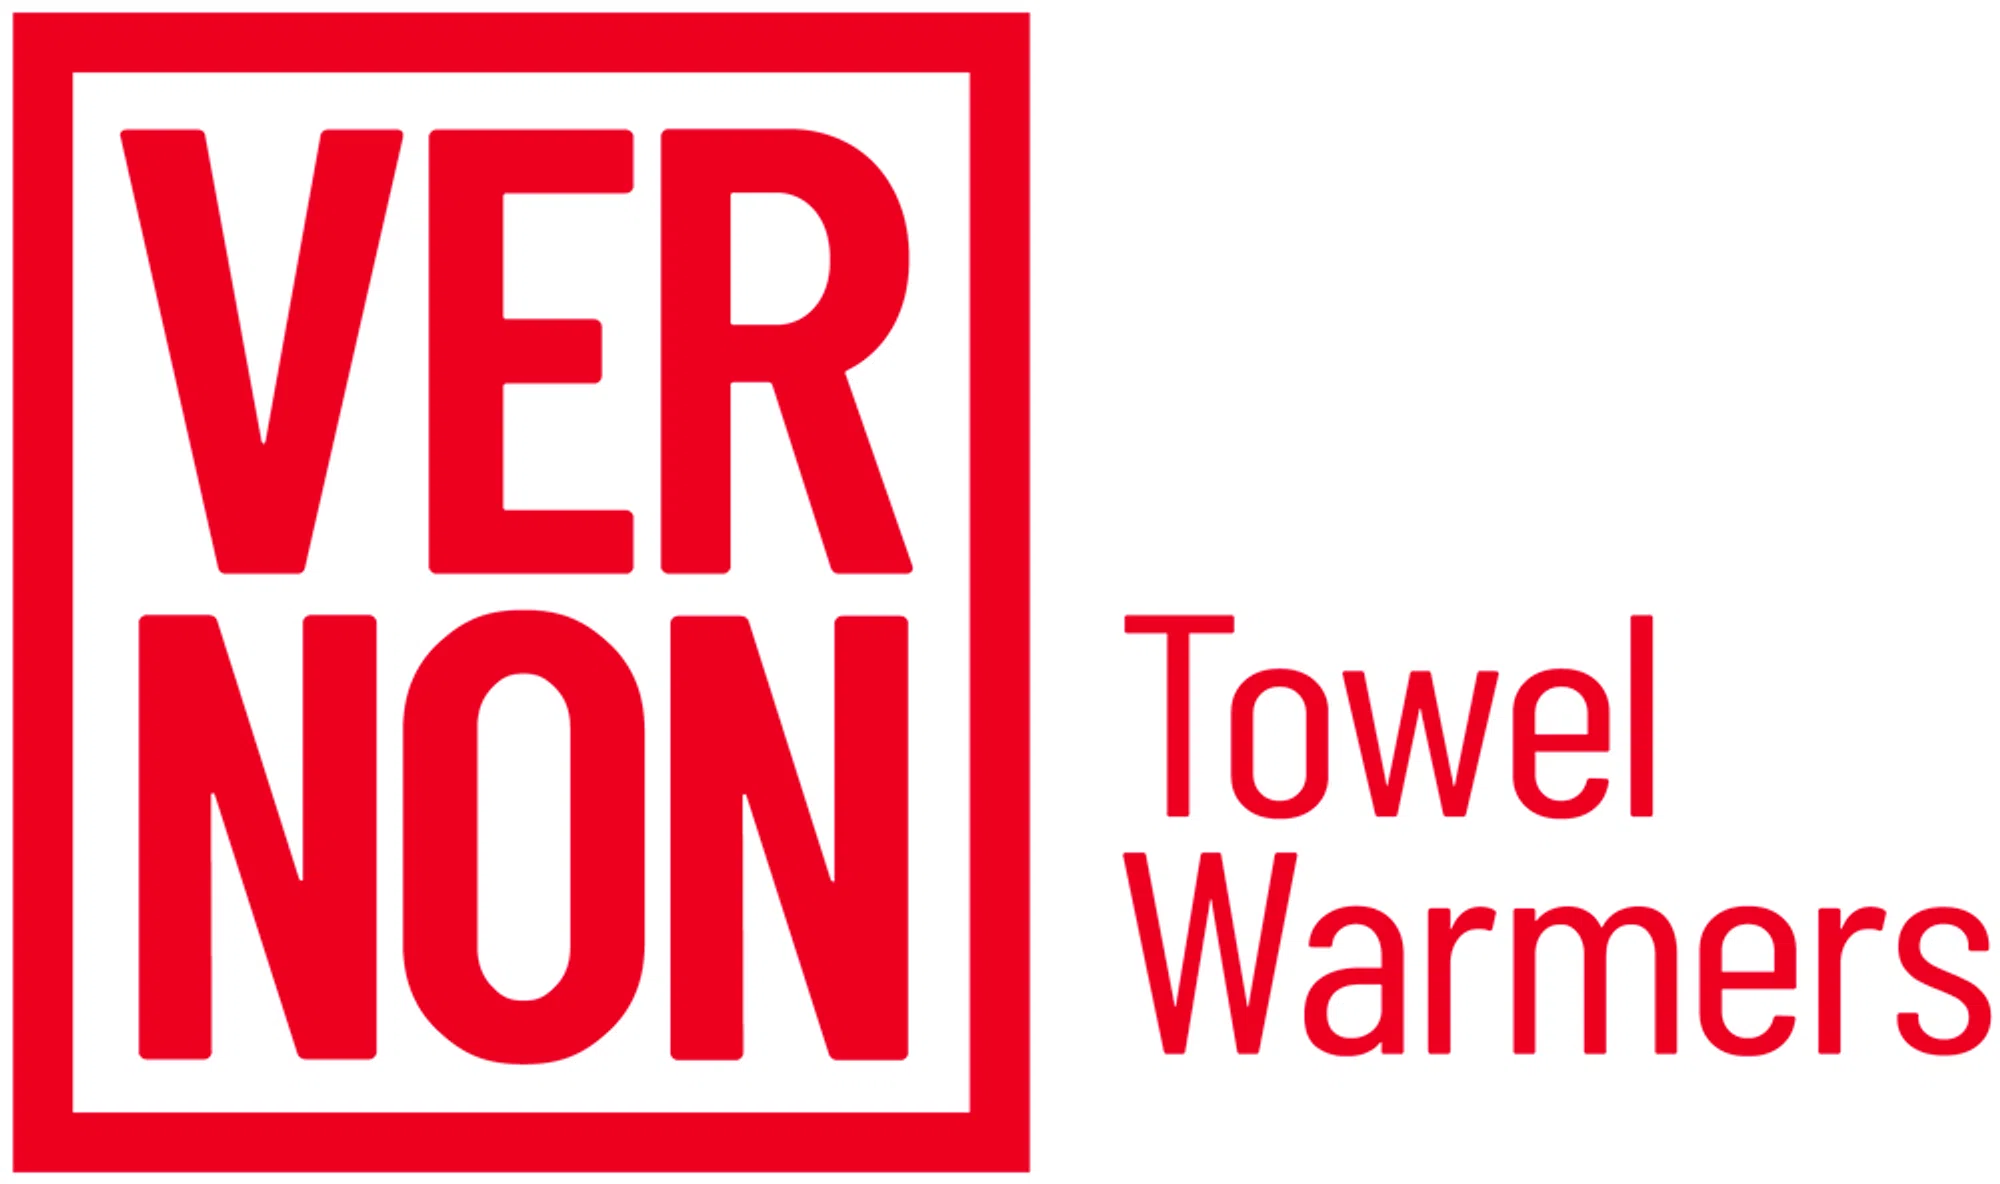 VERNON Towel Warmers